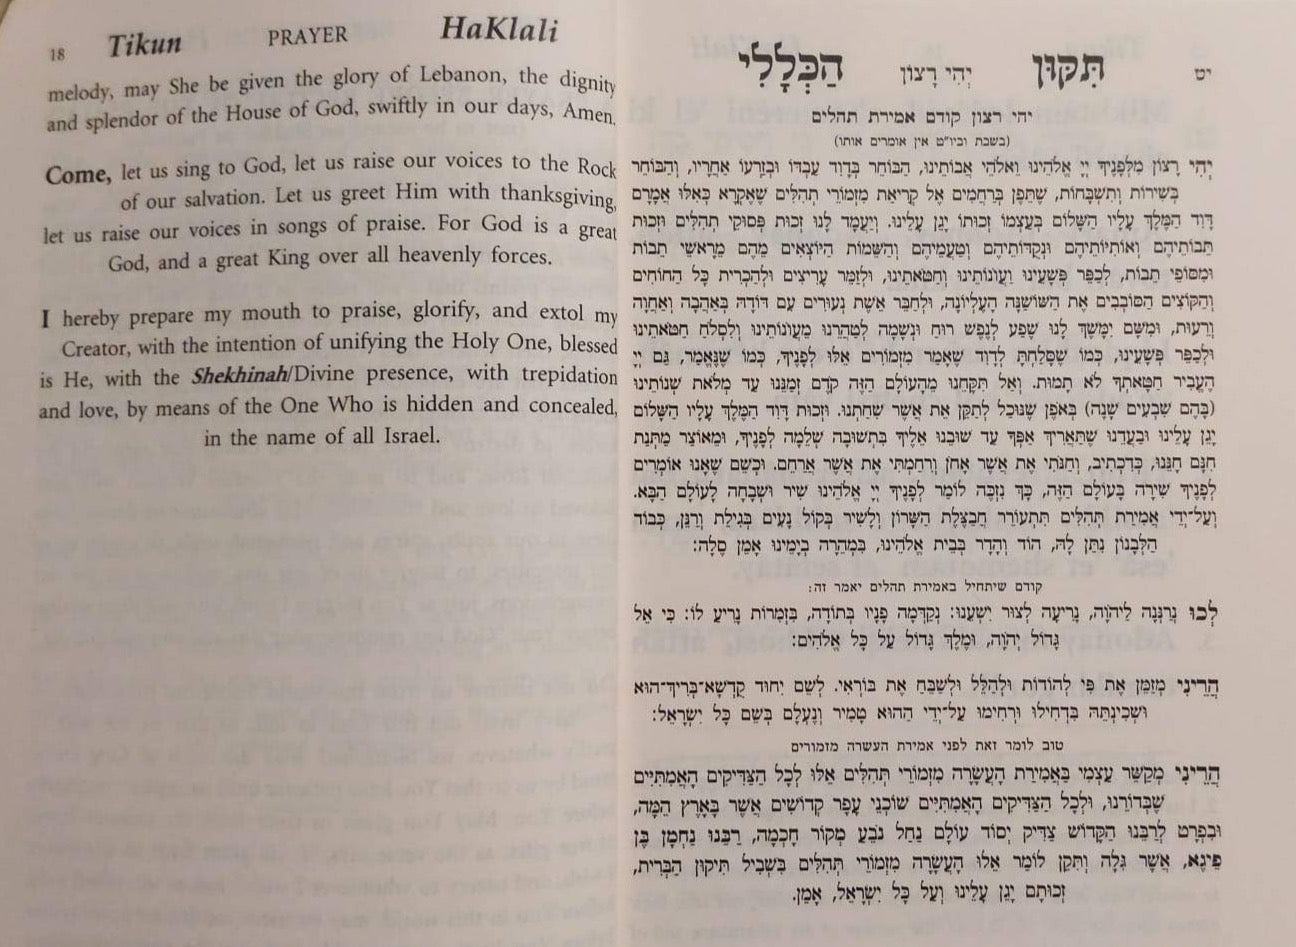 Tikkun HaKlali with English, Transliteration, & Hebrew